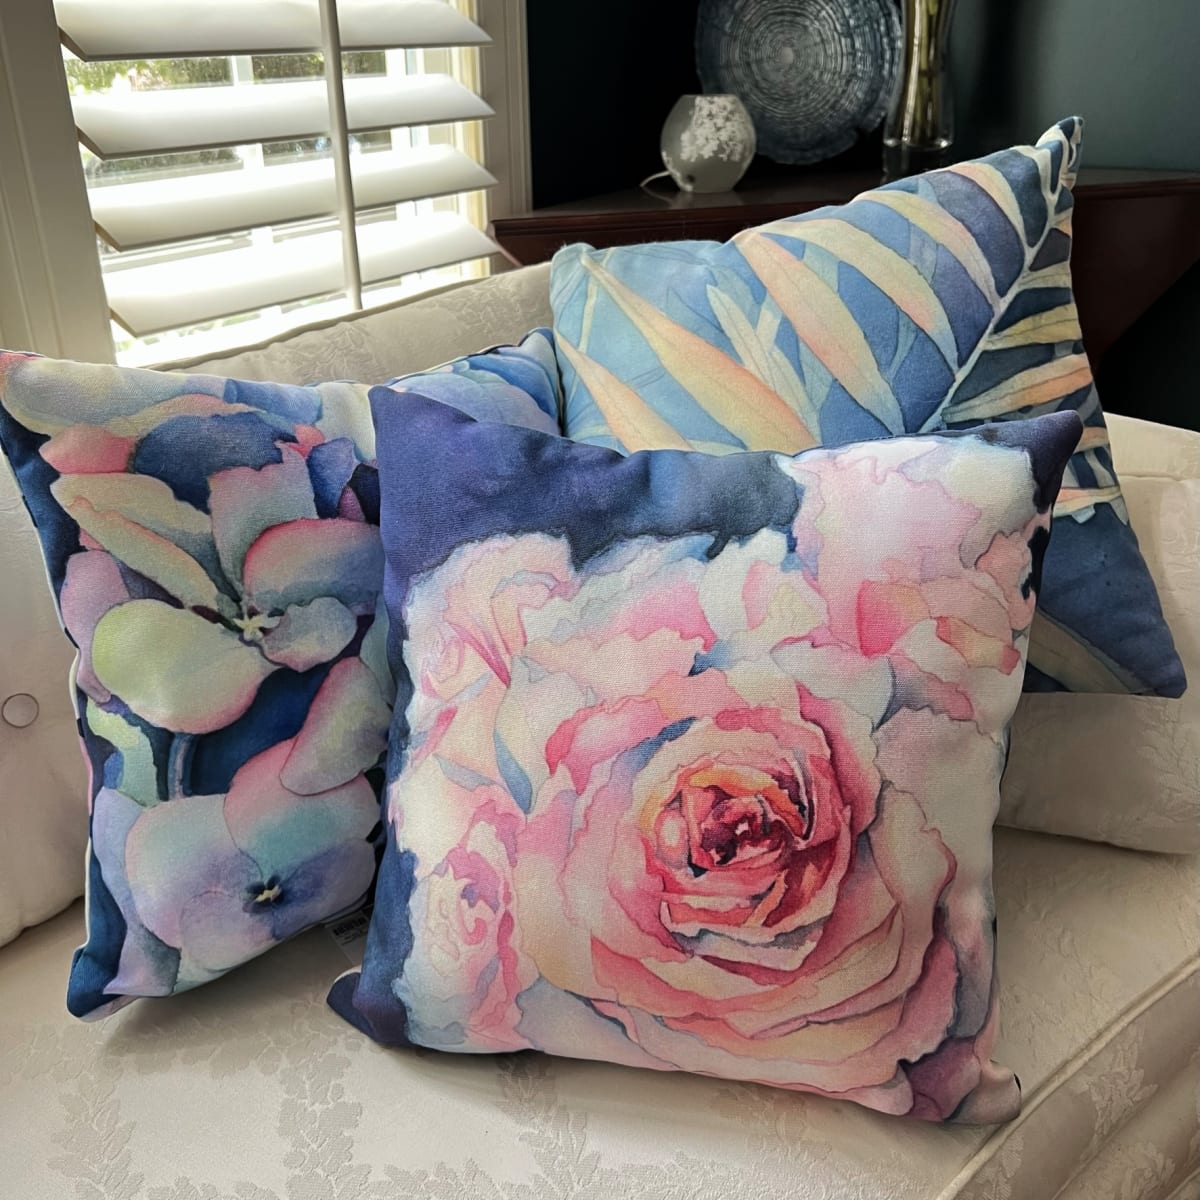 Floral Pillows by Lois Blasberg 